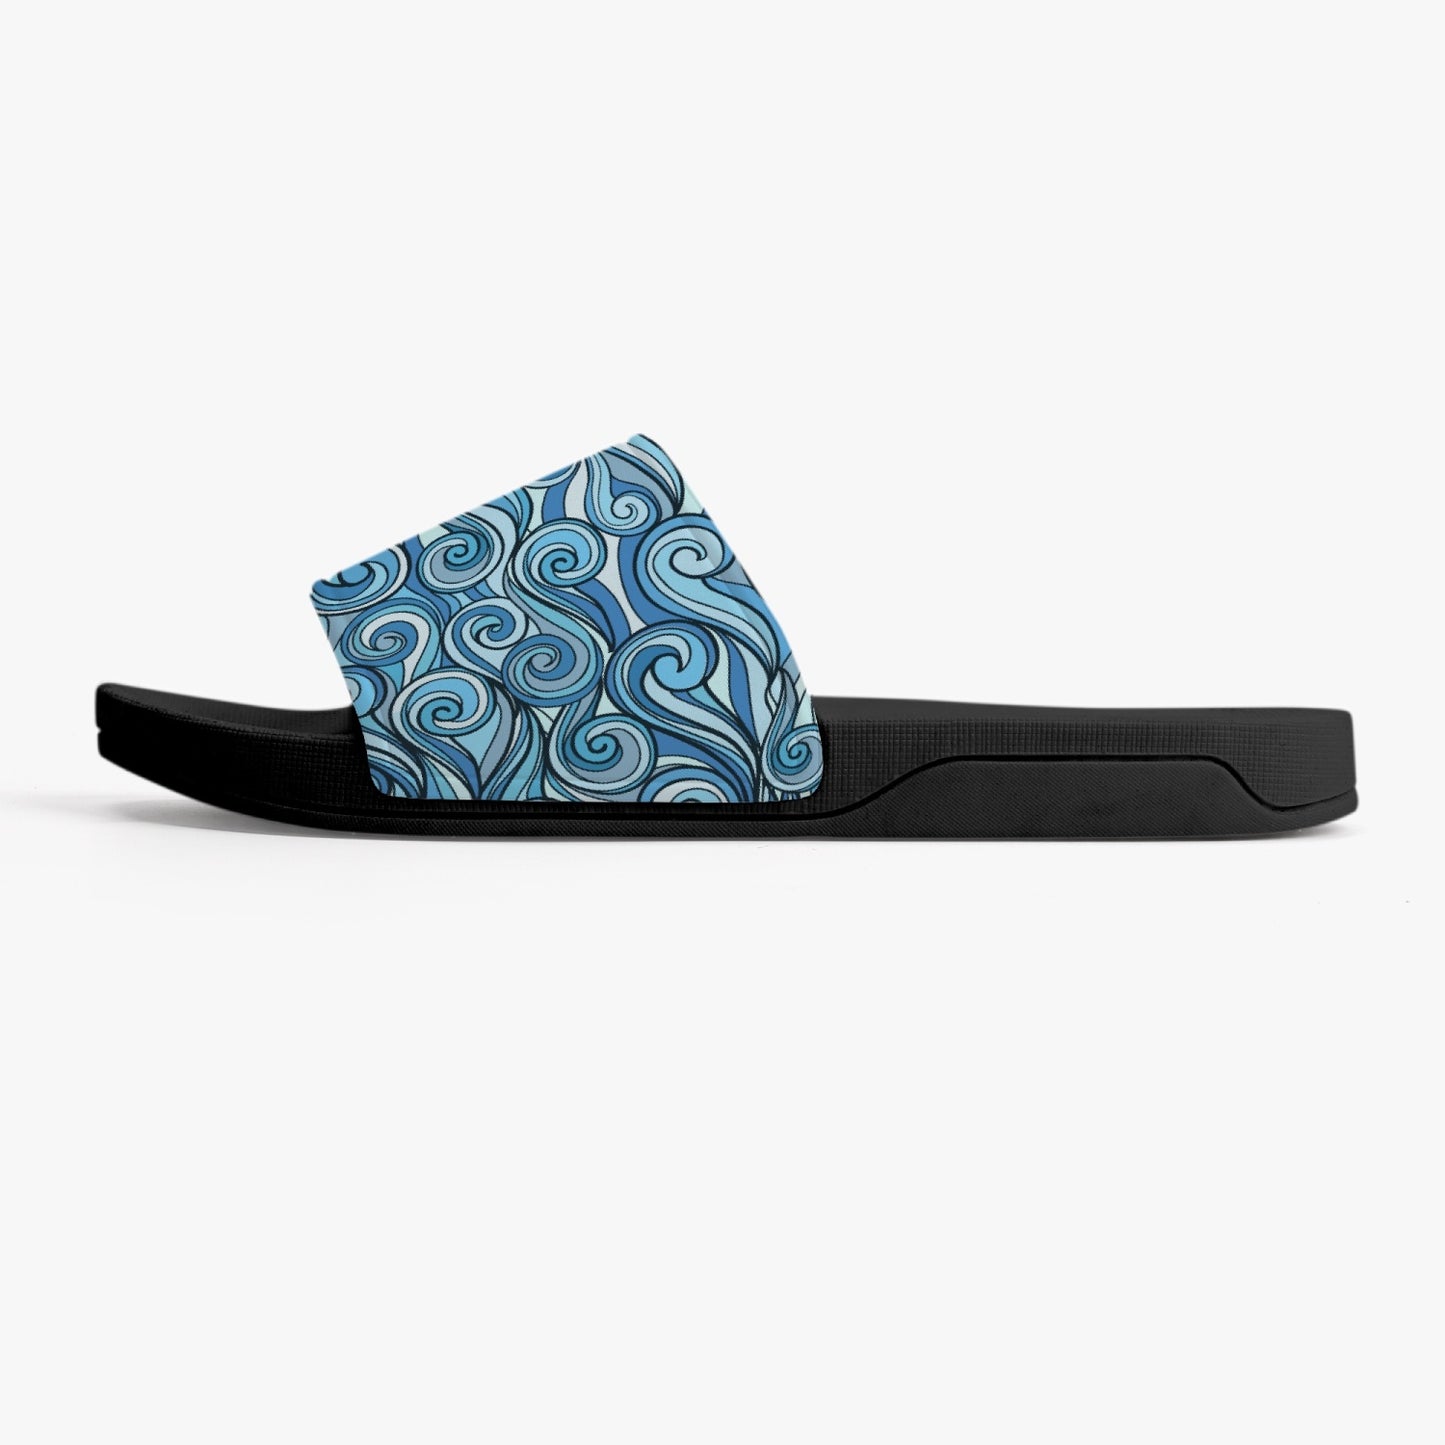 Groovy Waves Slides Sandals, Men Women Blue Ocean Black Designer Shoe Flat Wedge Slippers Casual Flip Flops Slip On Starcove Fashion